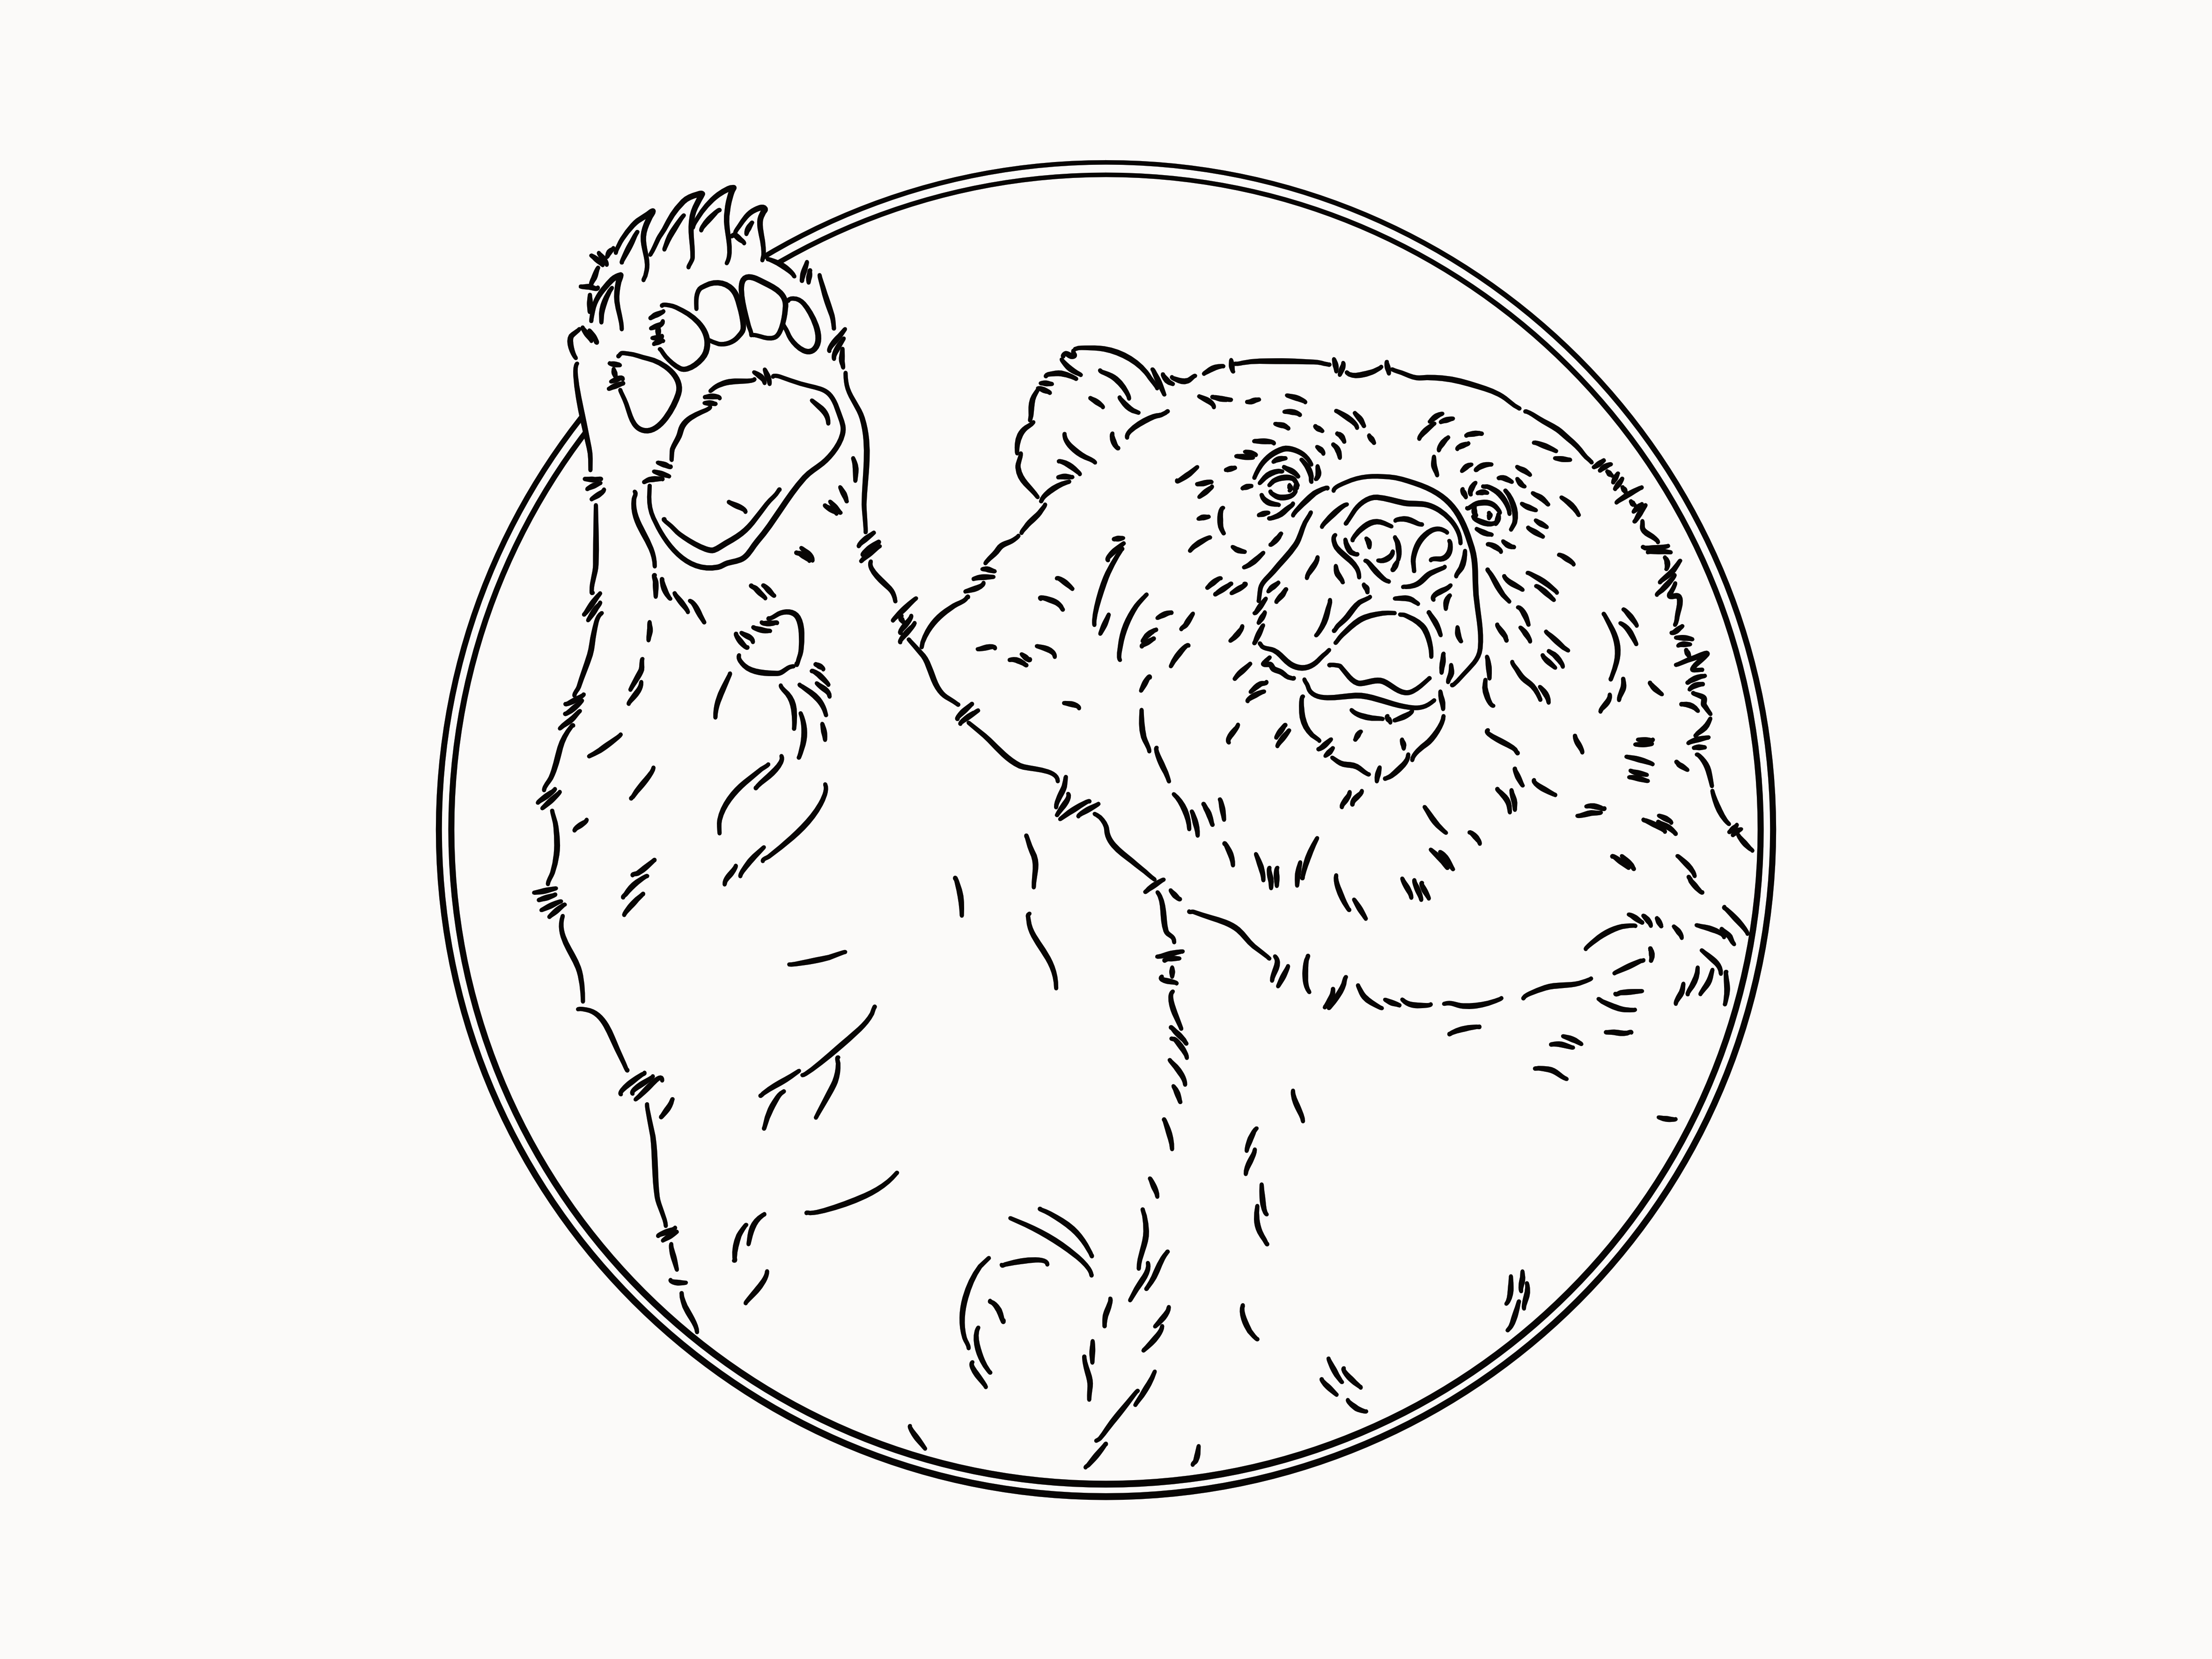 Bear waving hello illustration